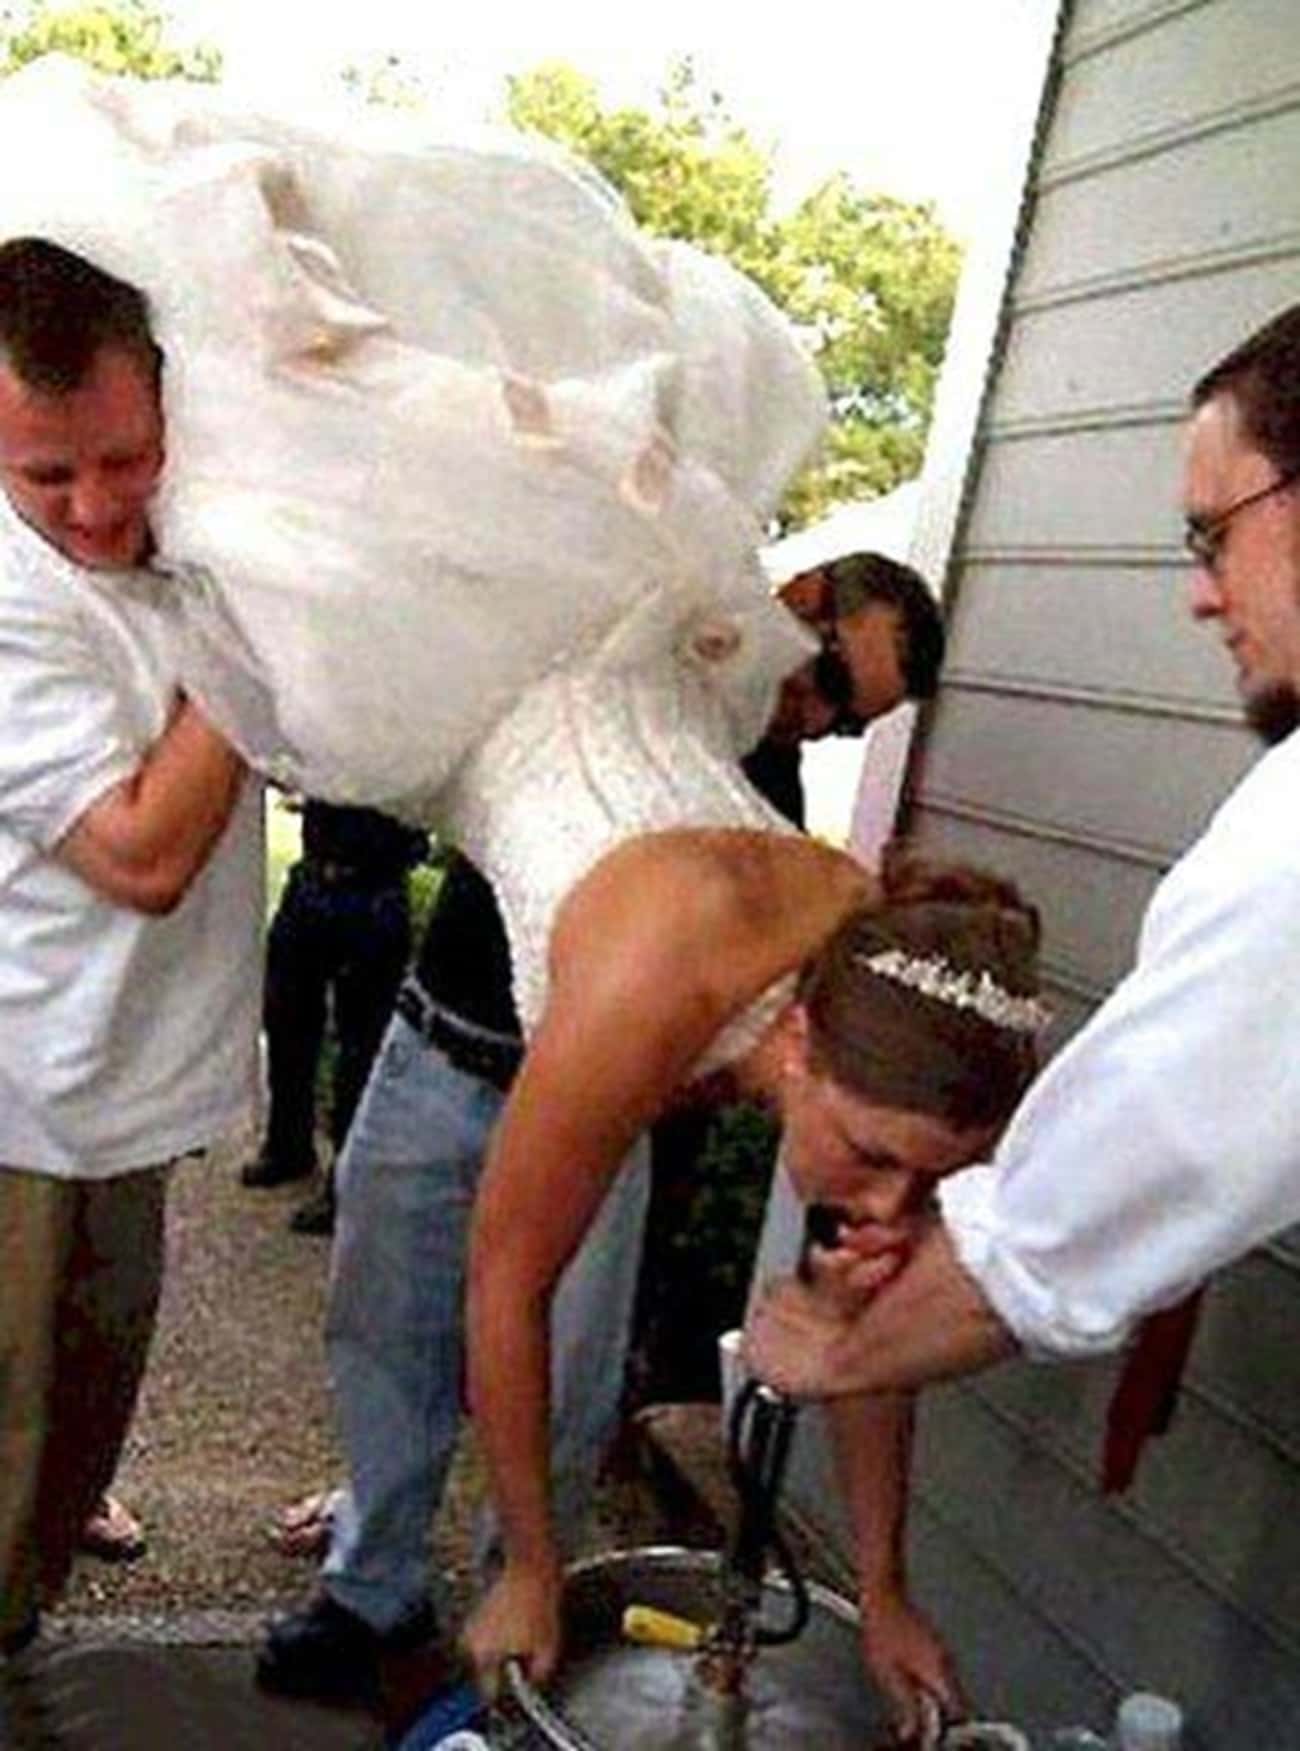 22 Super-Trashy Weddings and Newlyweds